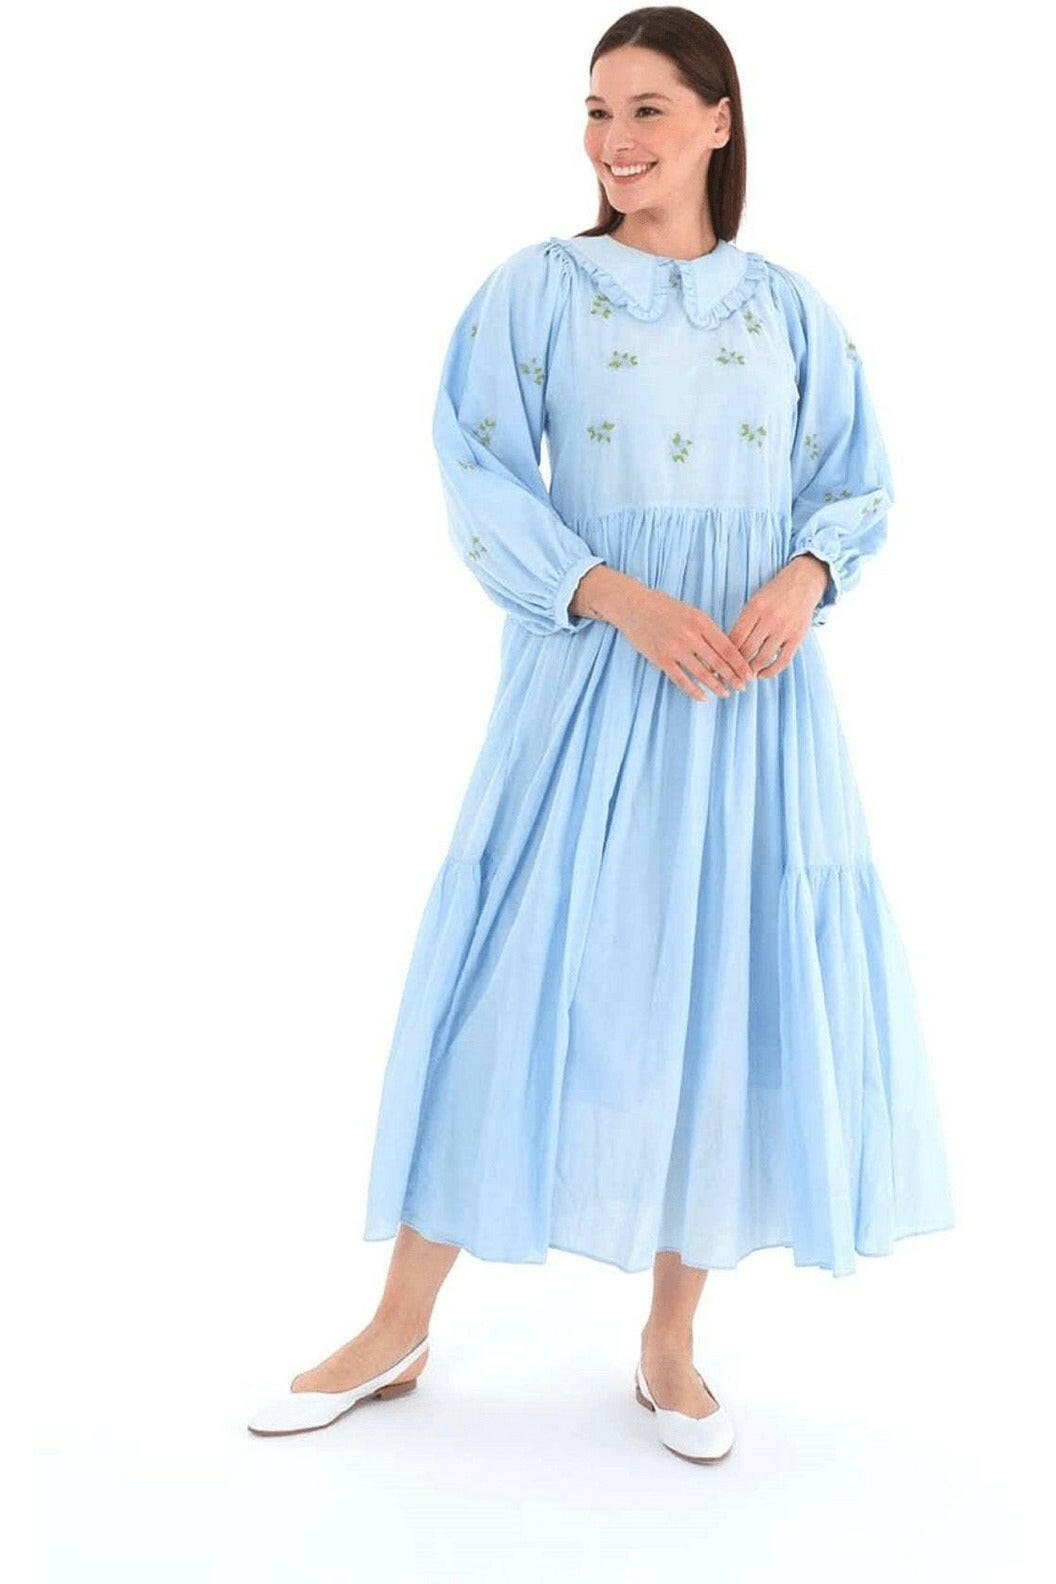 Alice Bohemian Summer Dress for women 100% Cotton - By Baano